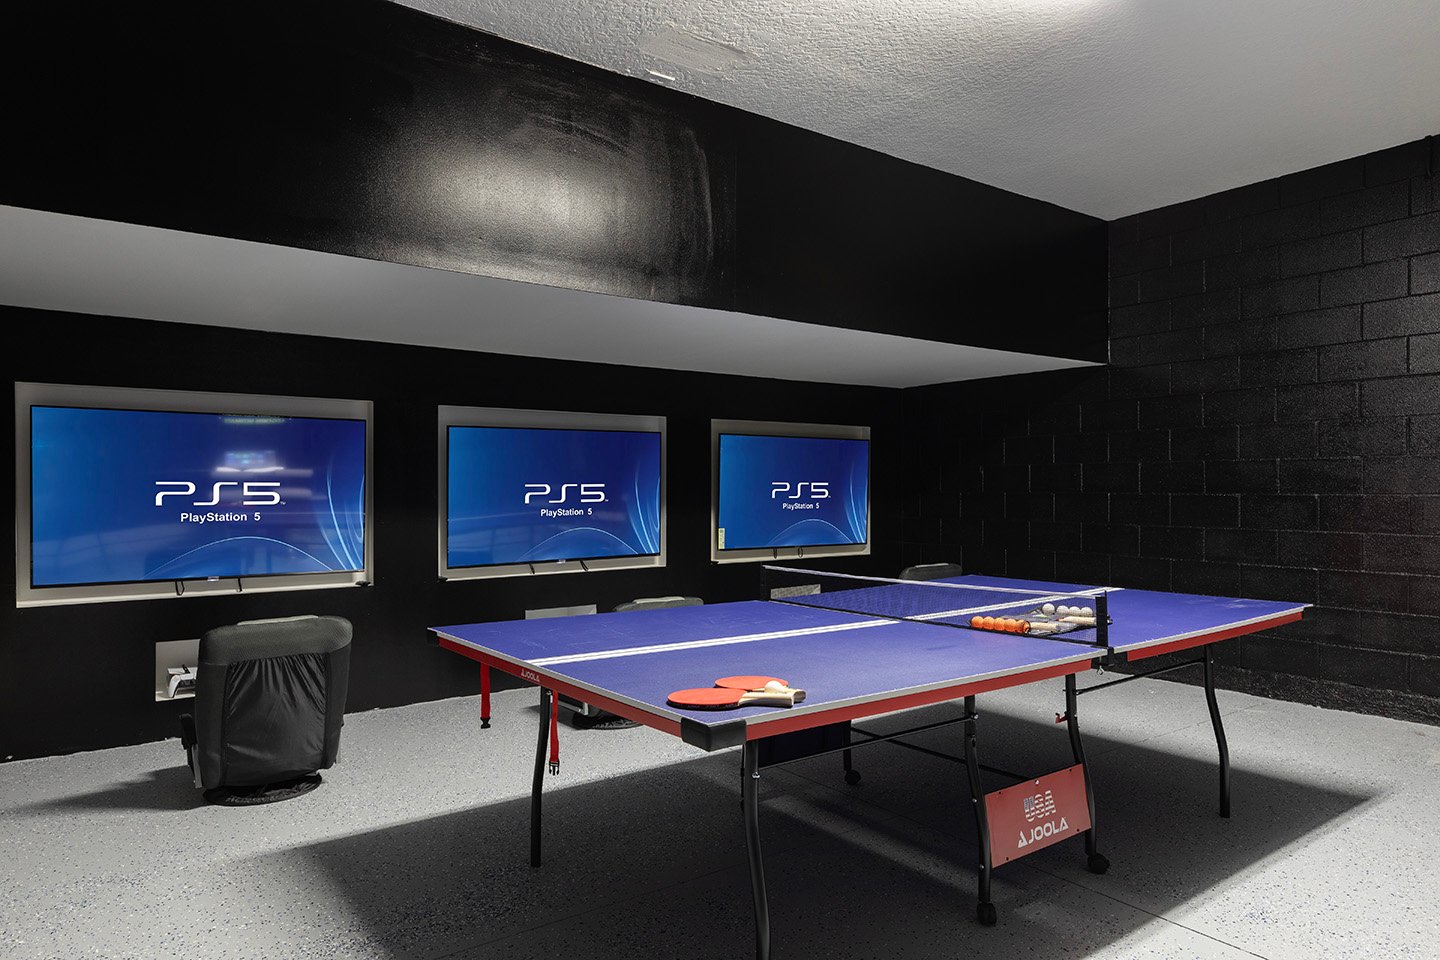 [amenities:game-room:1] Game Room